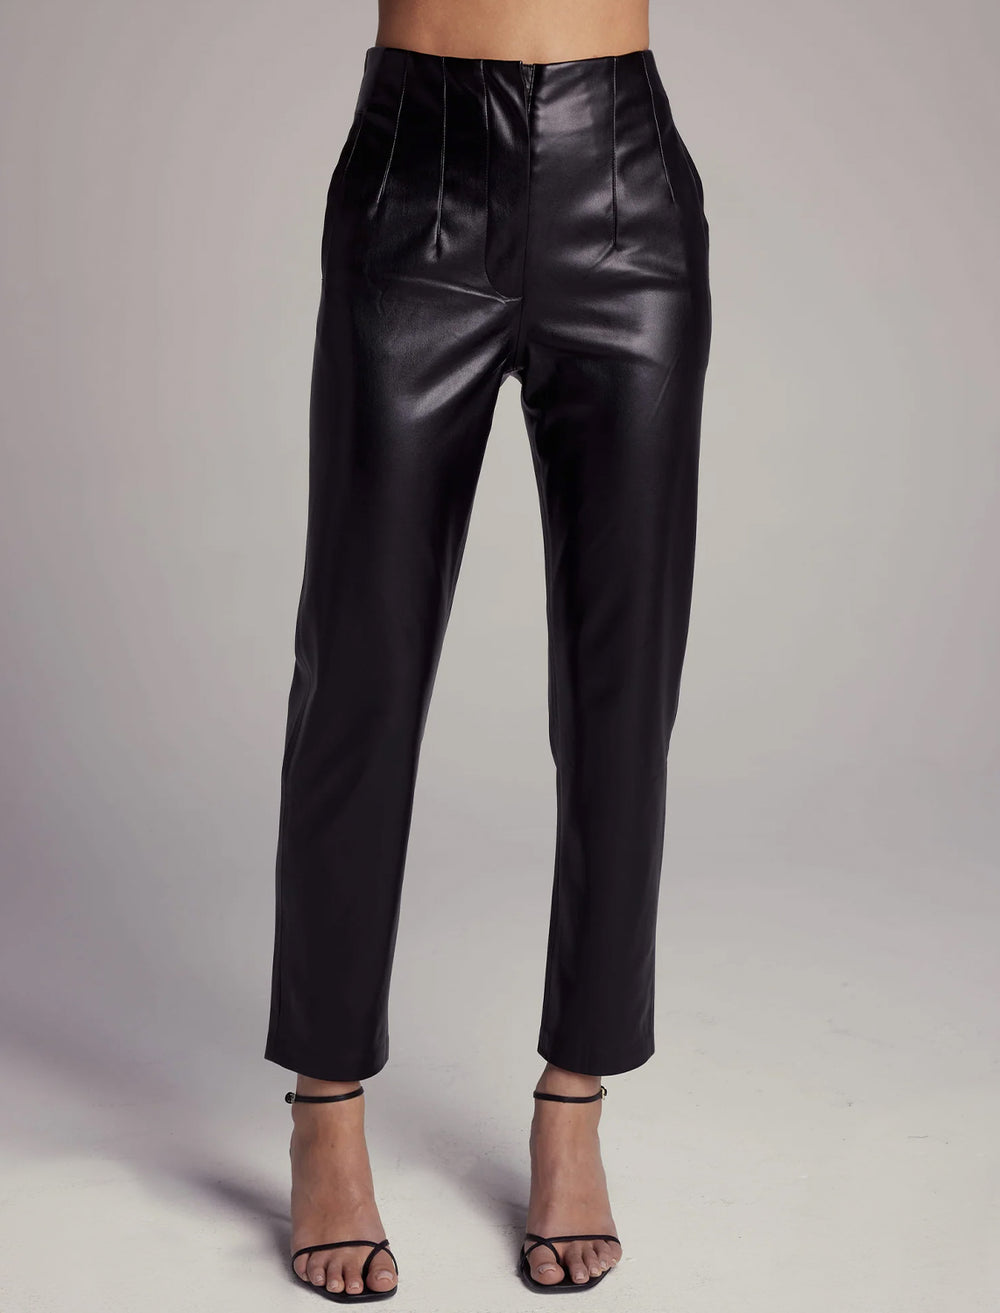 Model wearing Sundays NYC's keaton pants in black.